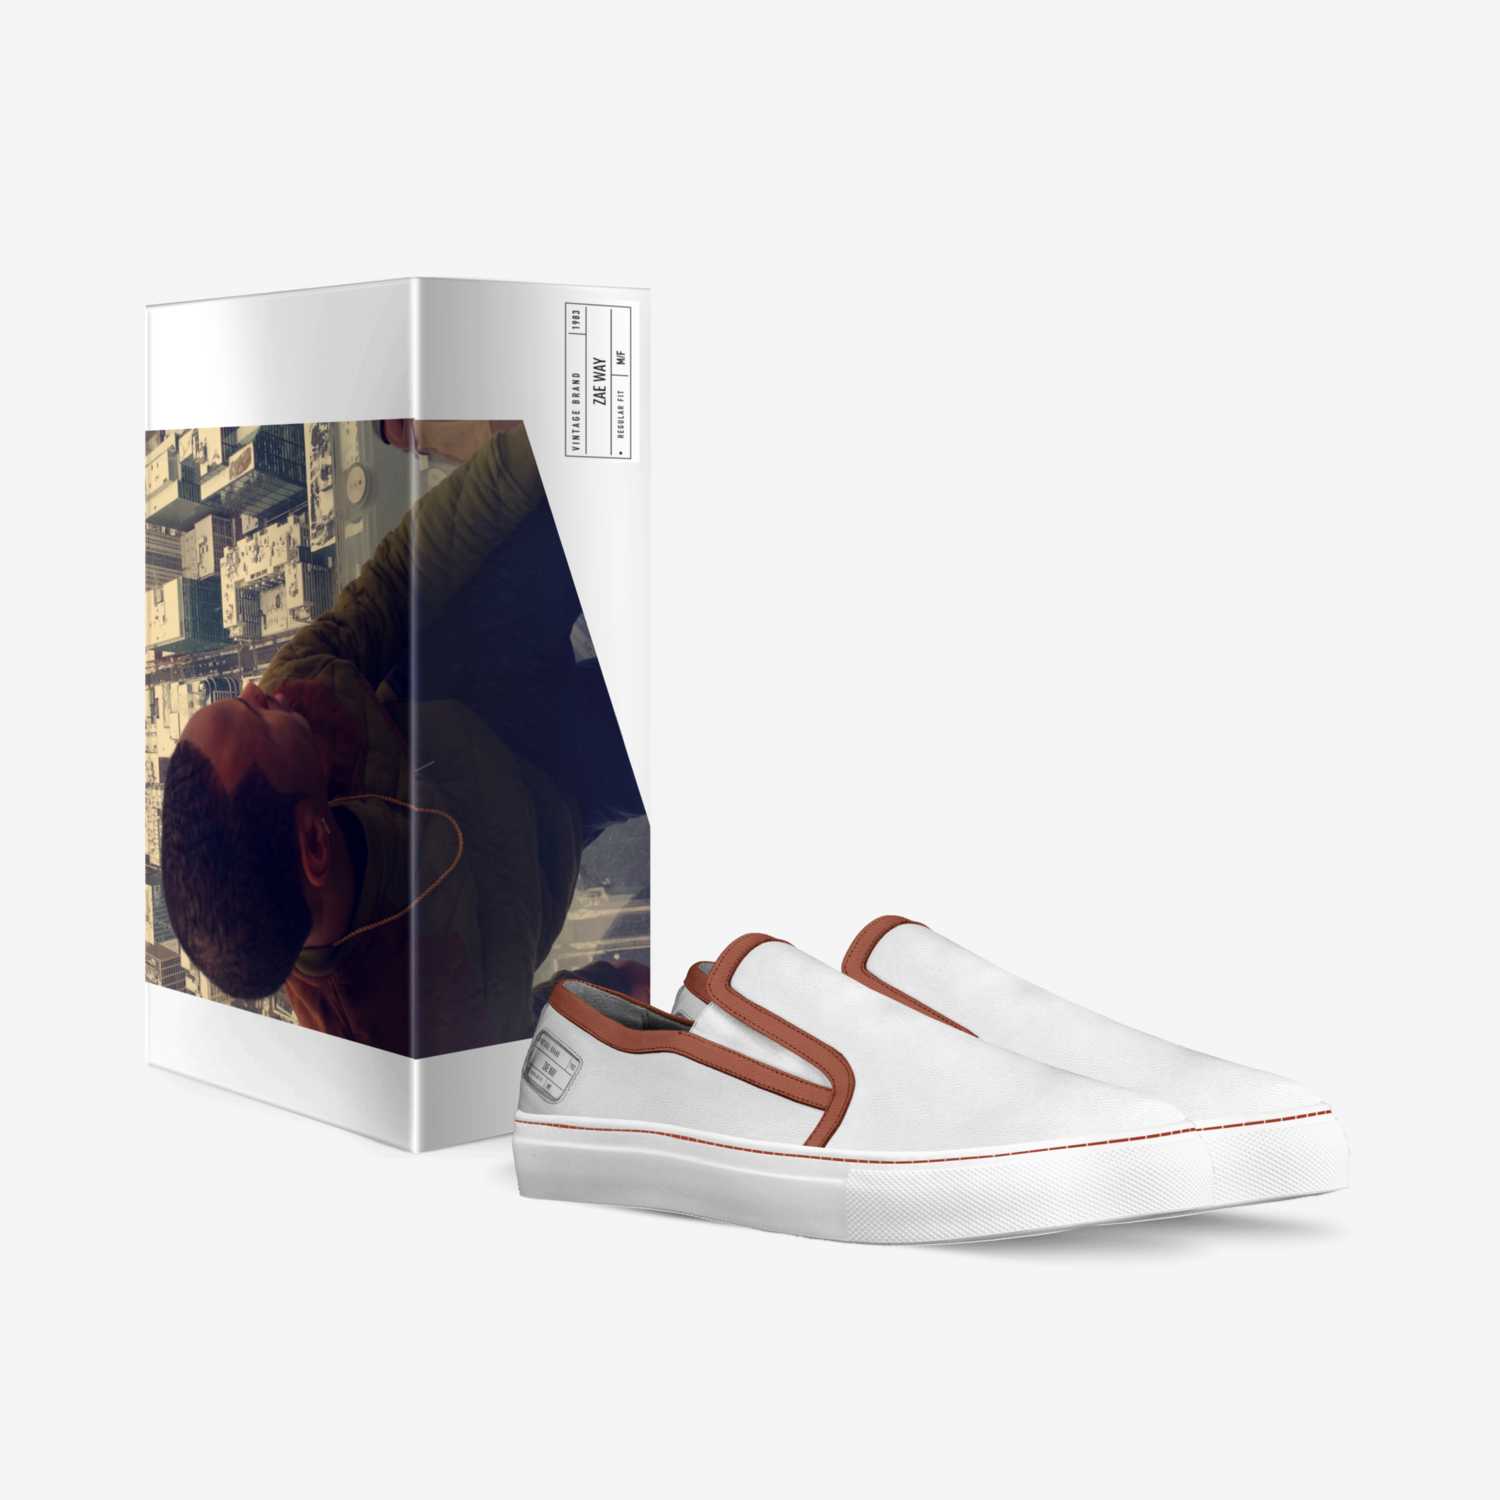 Zae way custom made in Italy shoes by Xzavier Jackson | Box view